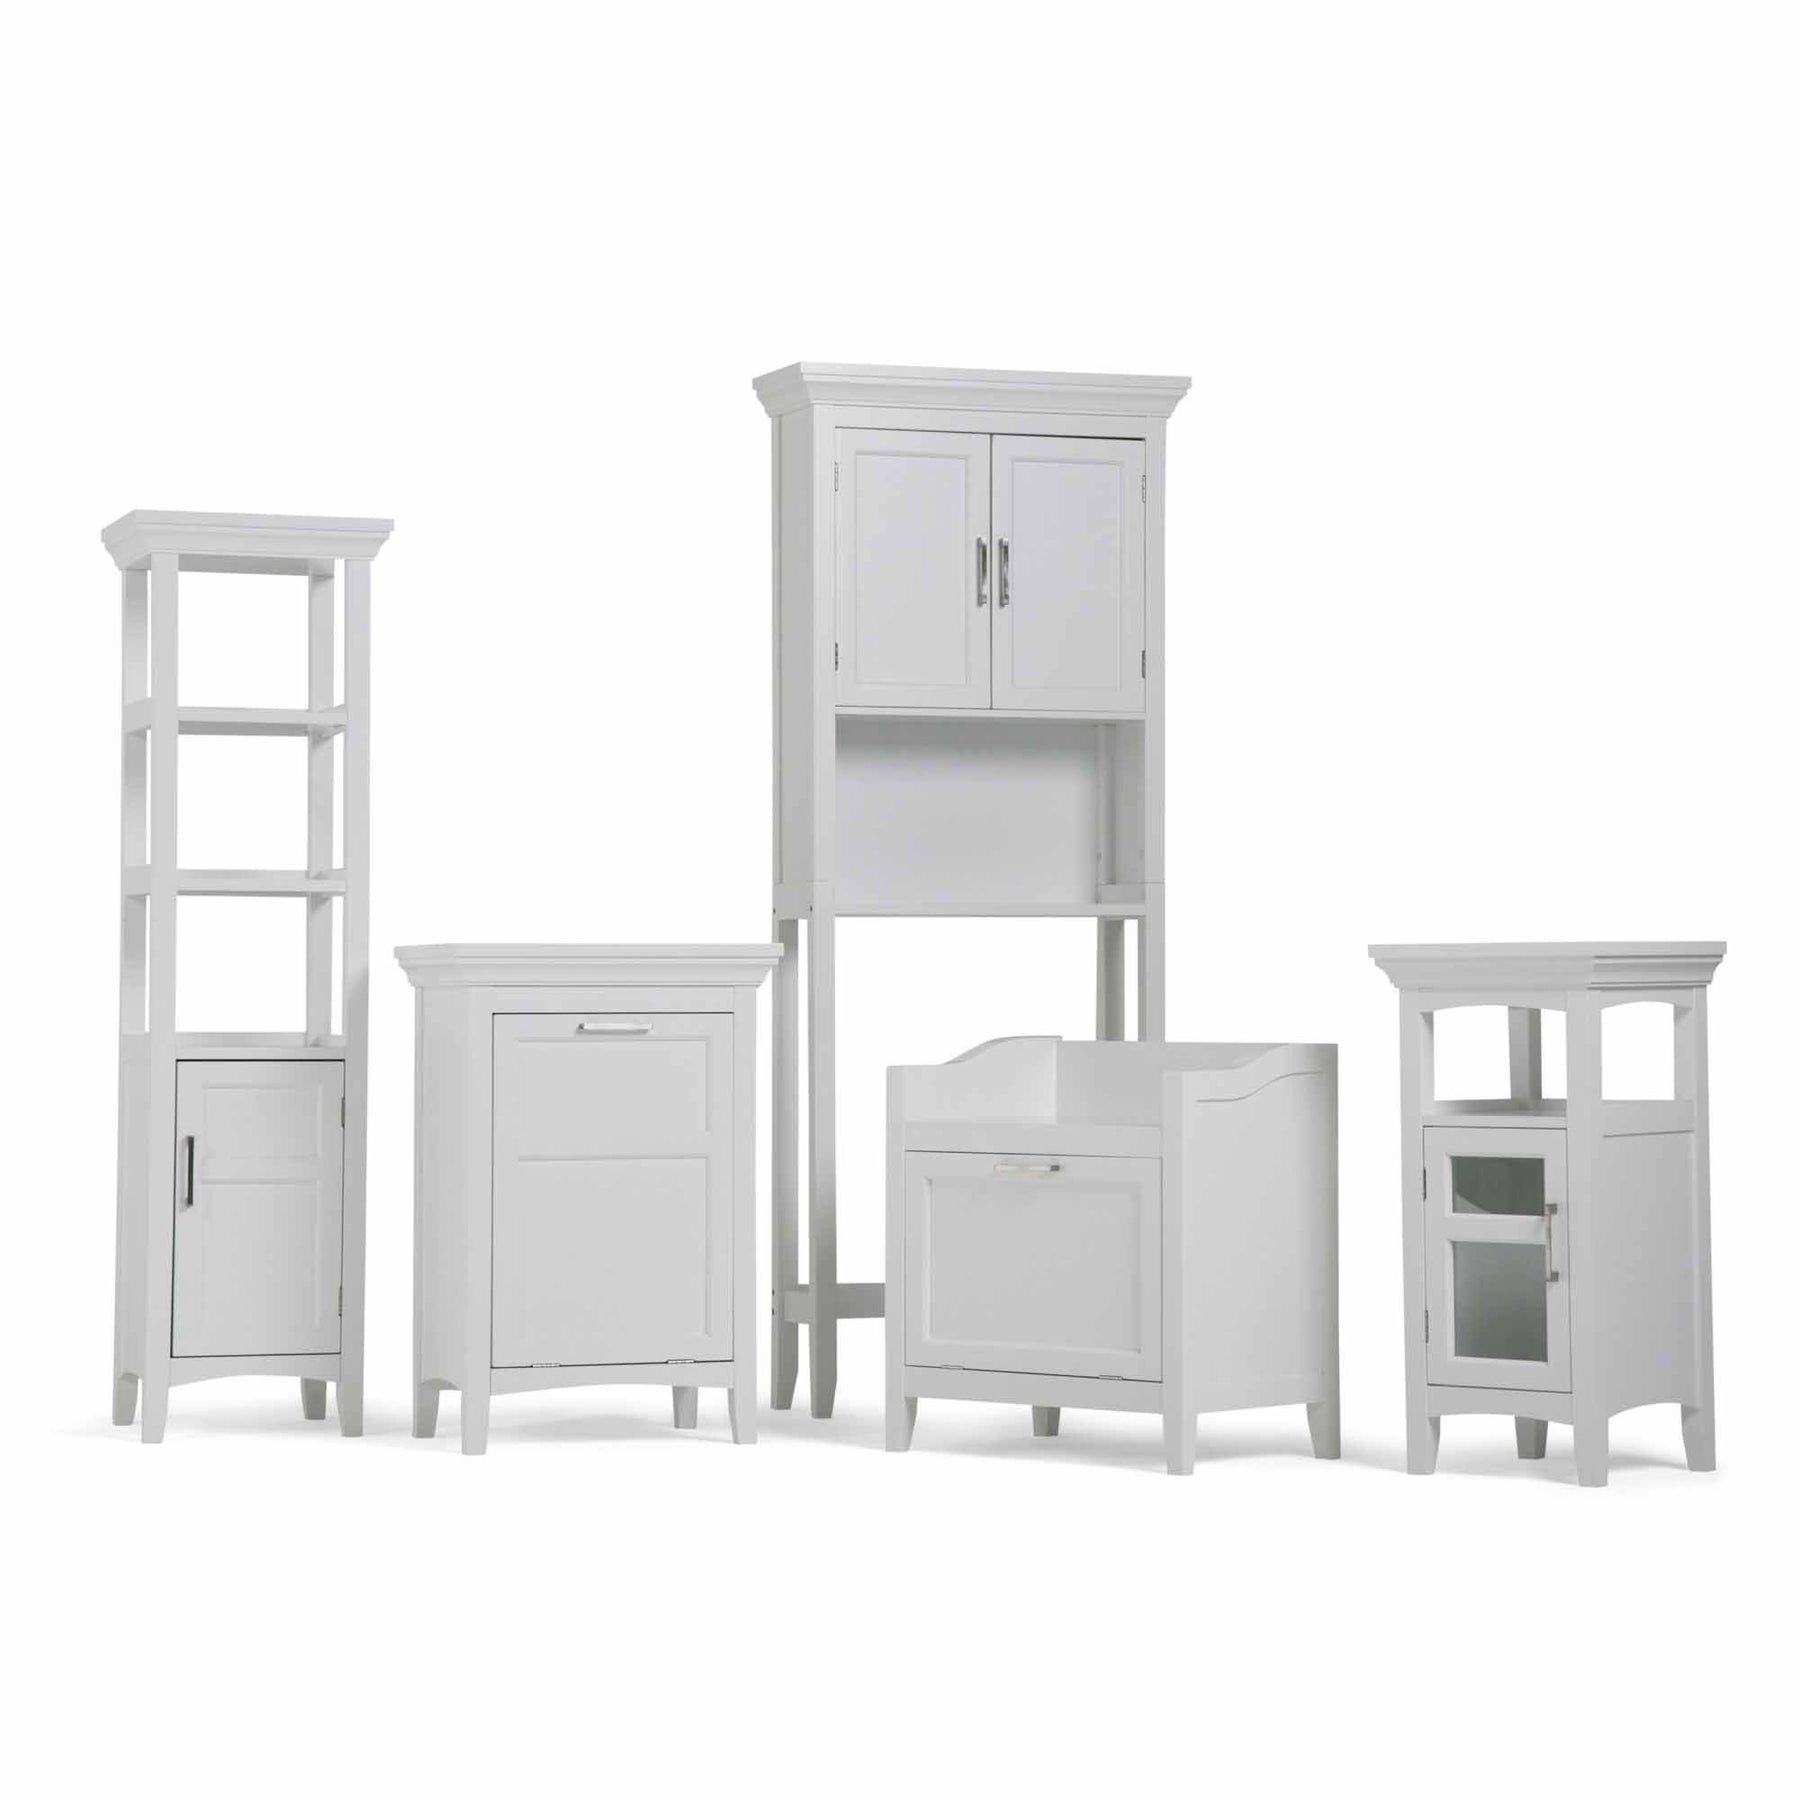 Pure White | Avington Space Saver Cabinet